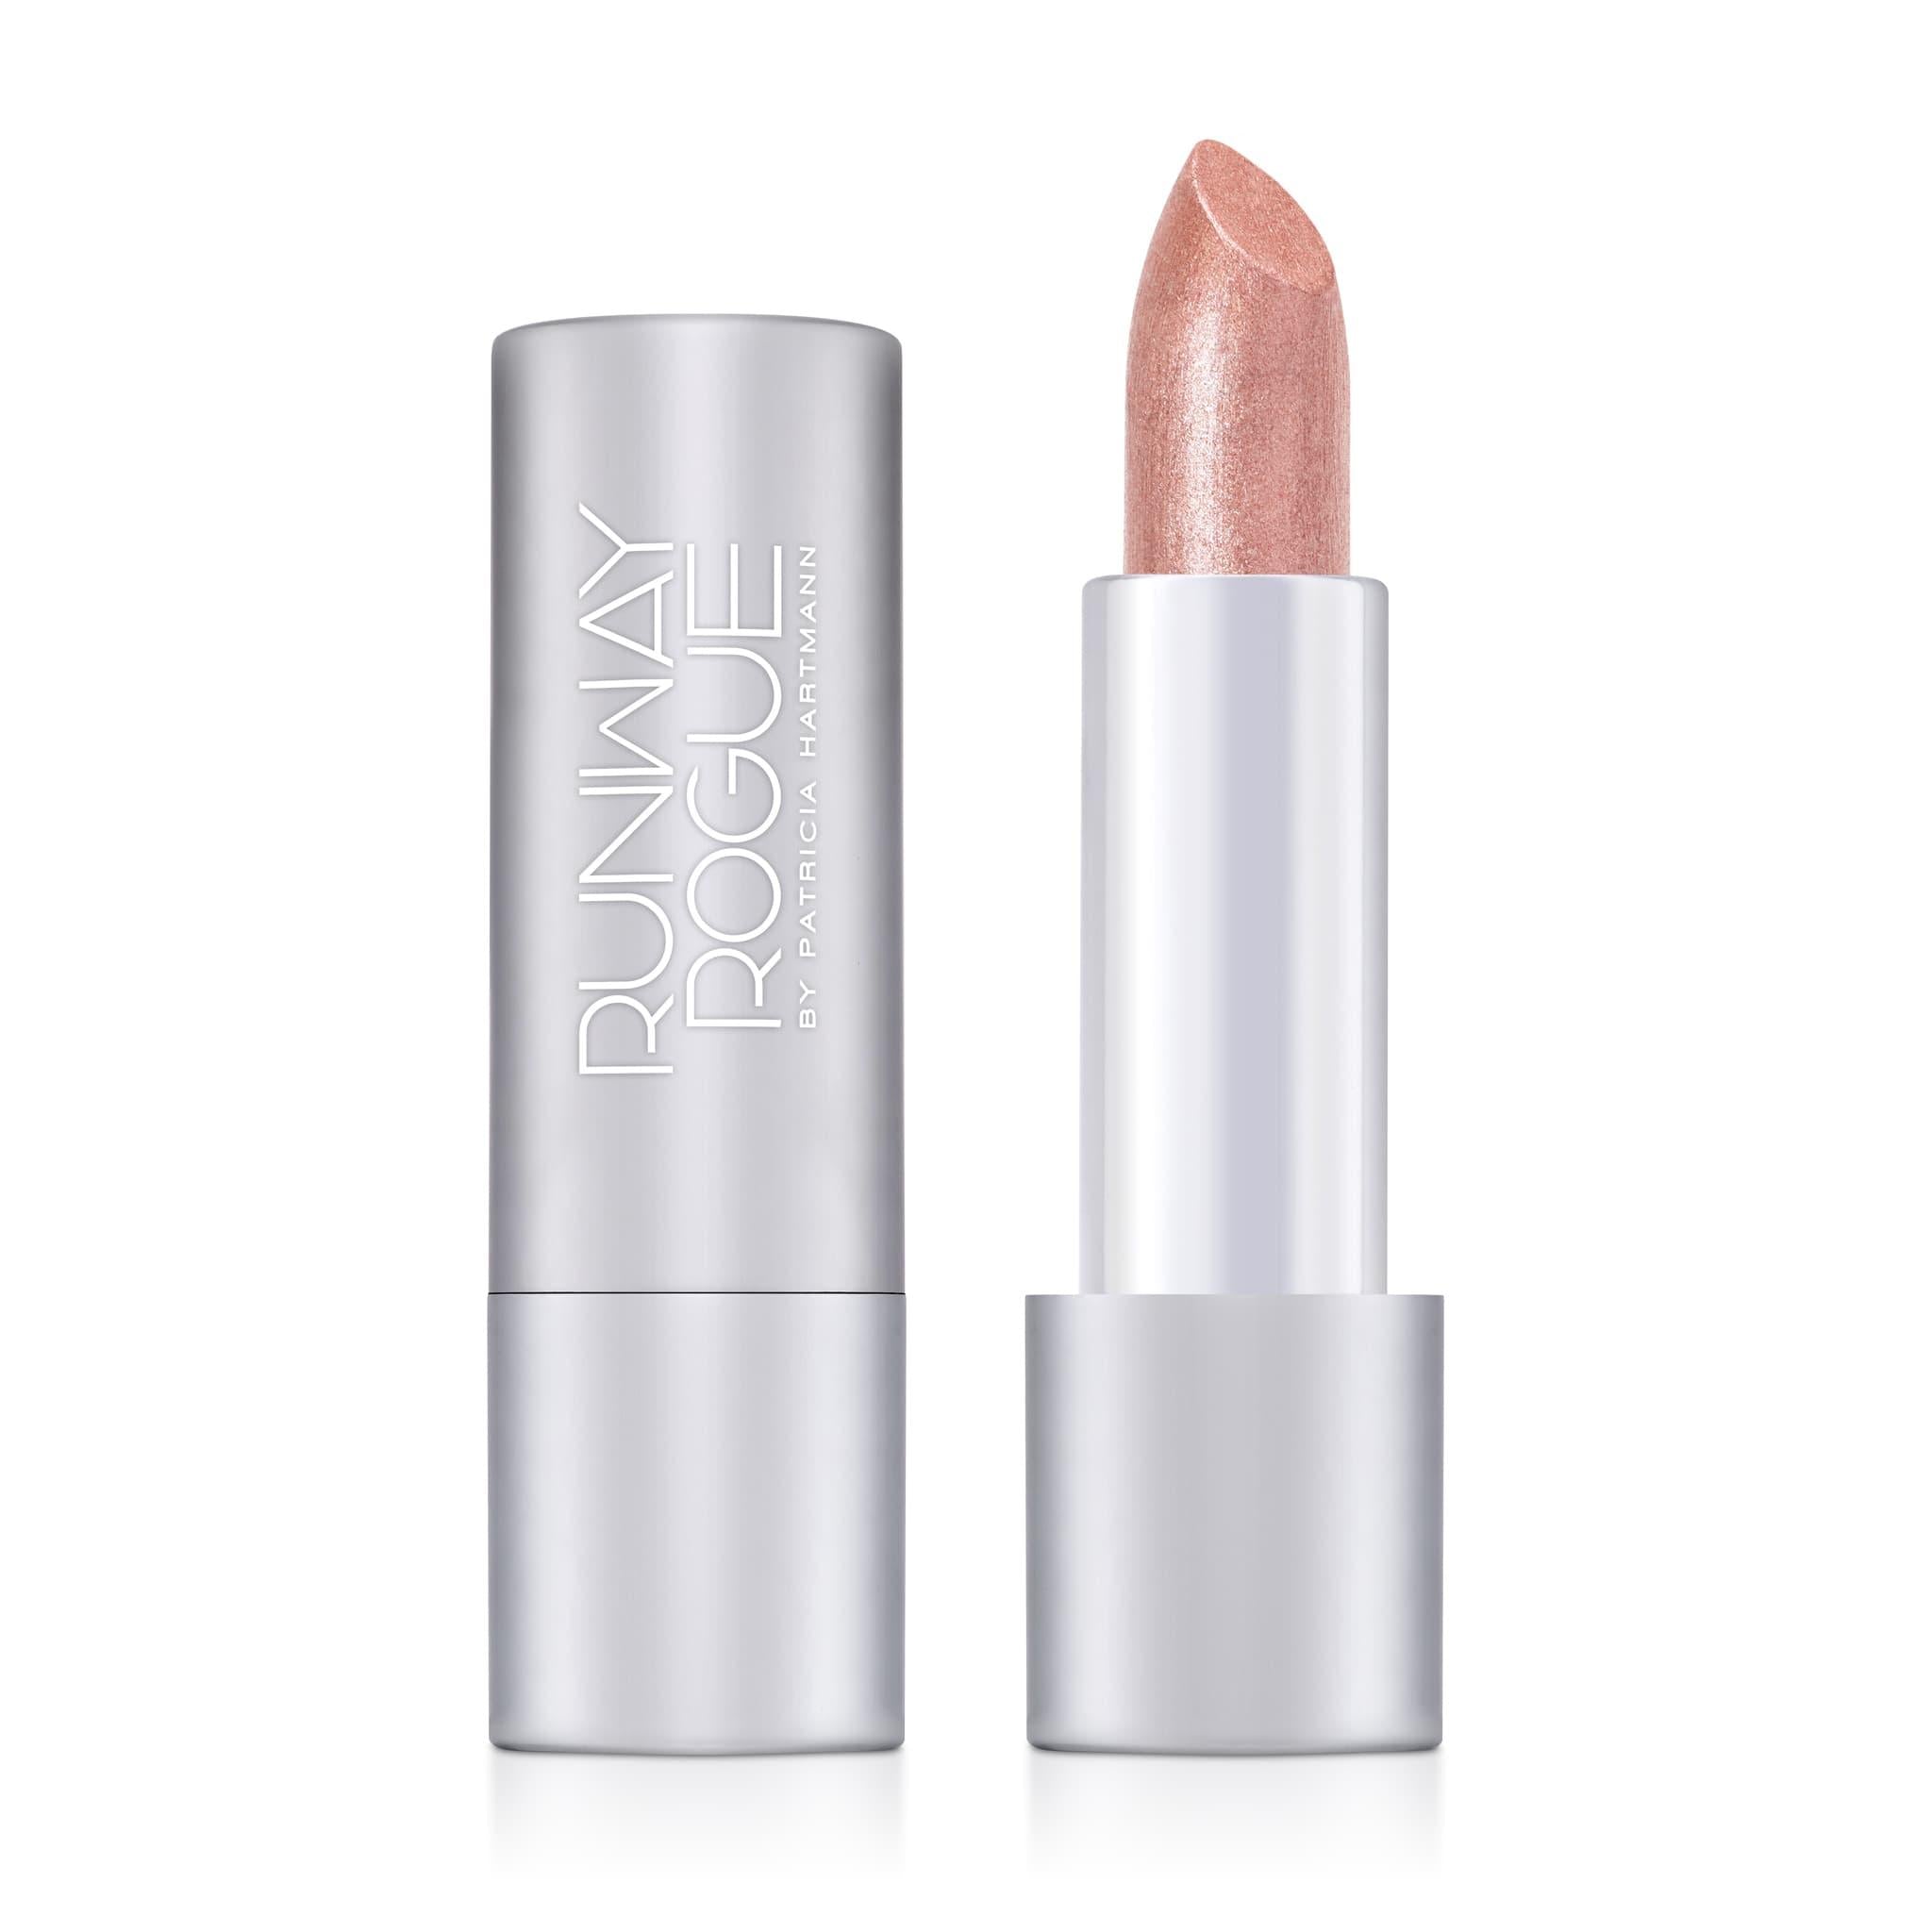 Chanel Hydrabase Lipsticks - Beauty Review